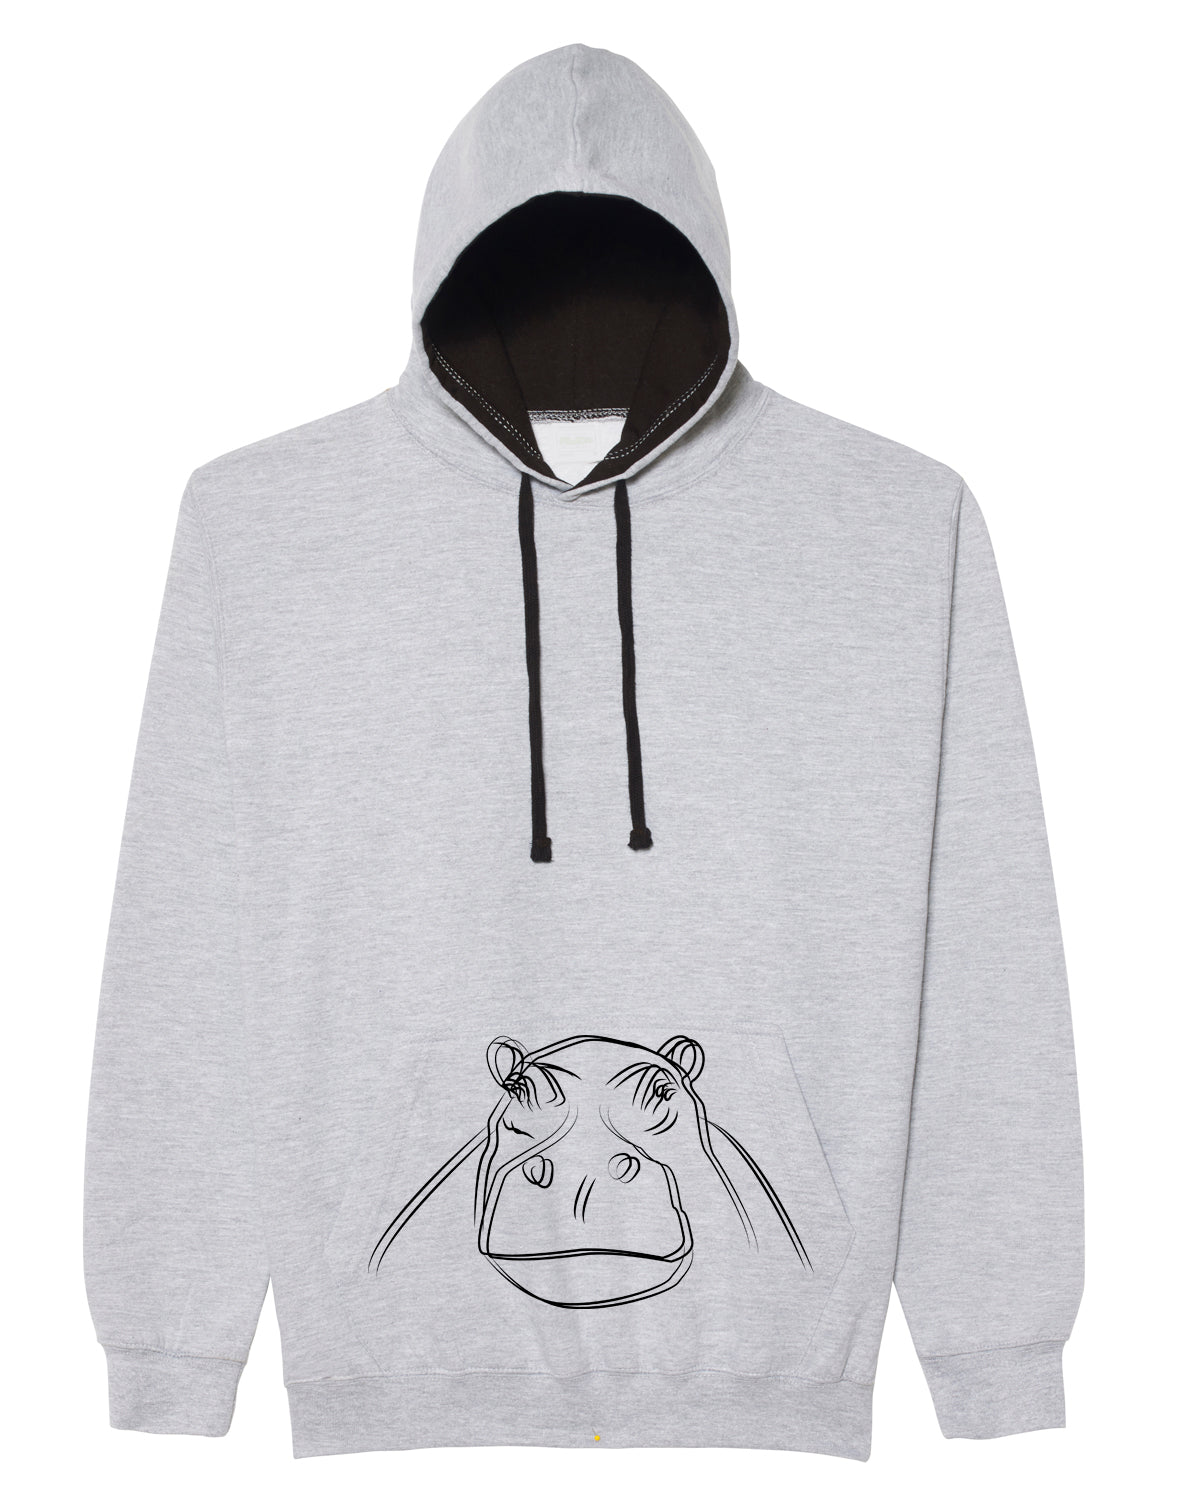 Double Hippo hoodie, grey black